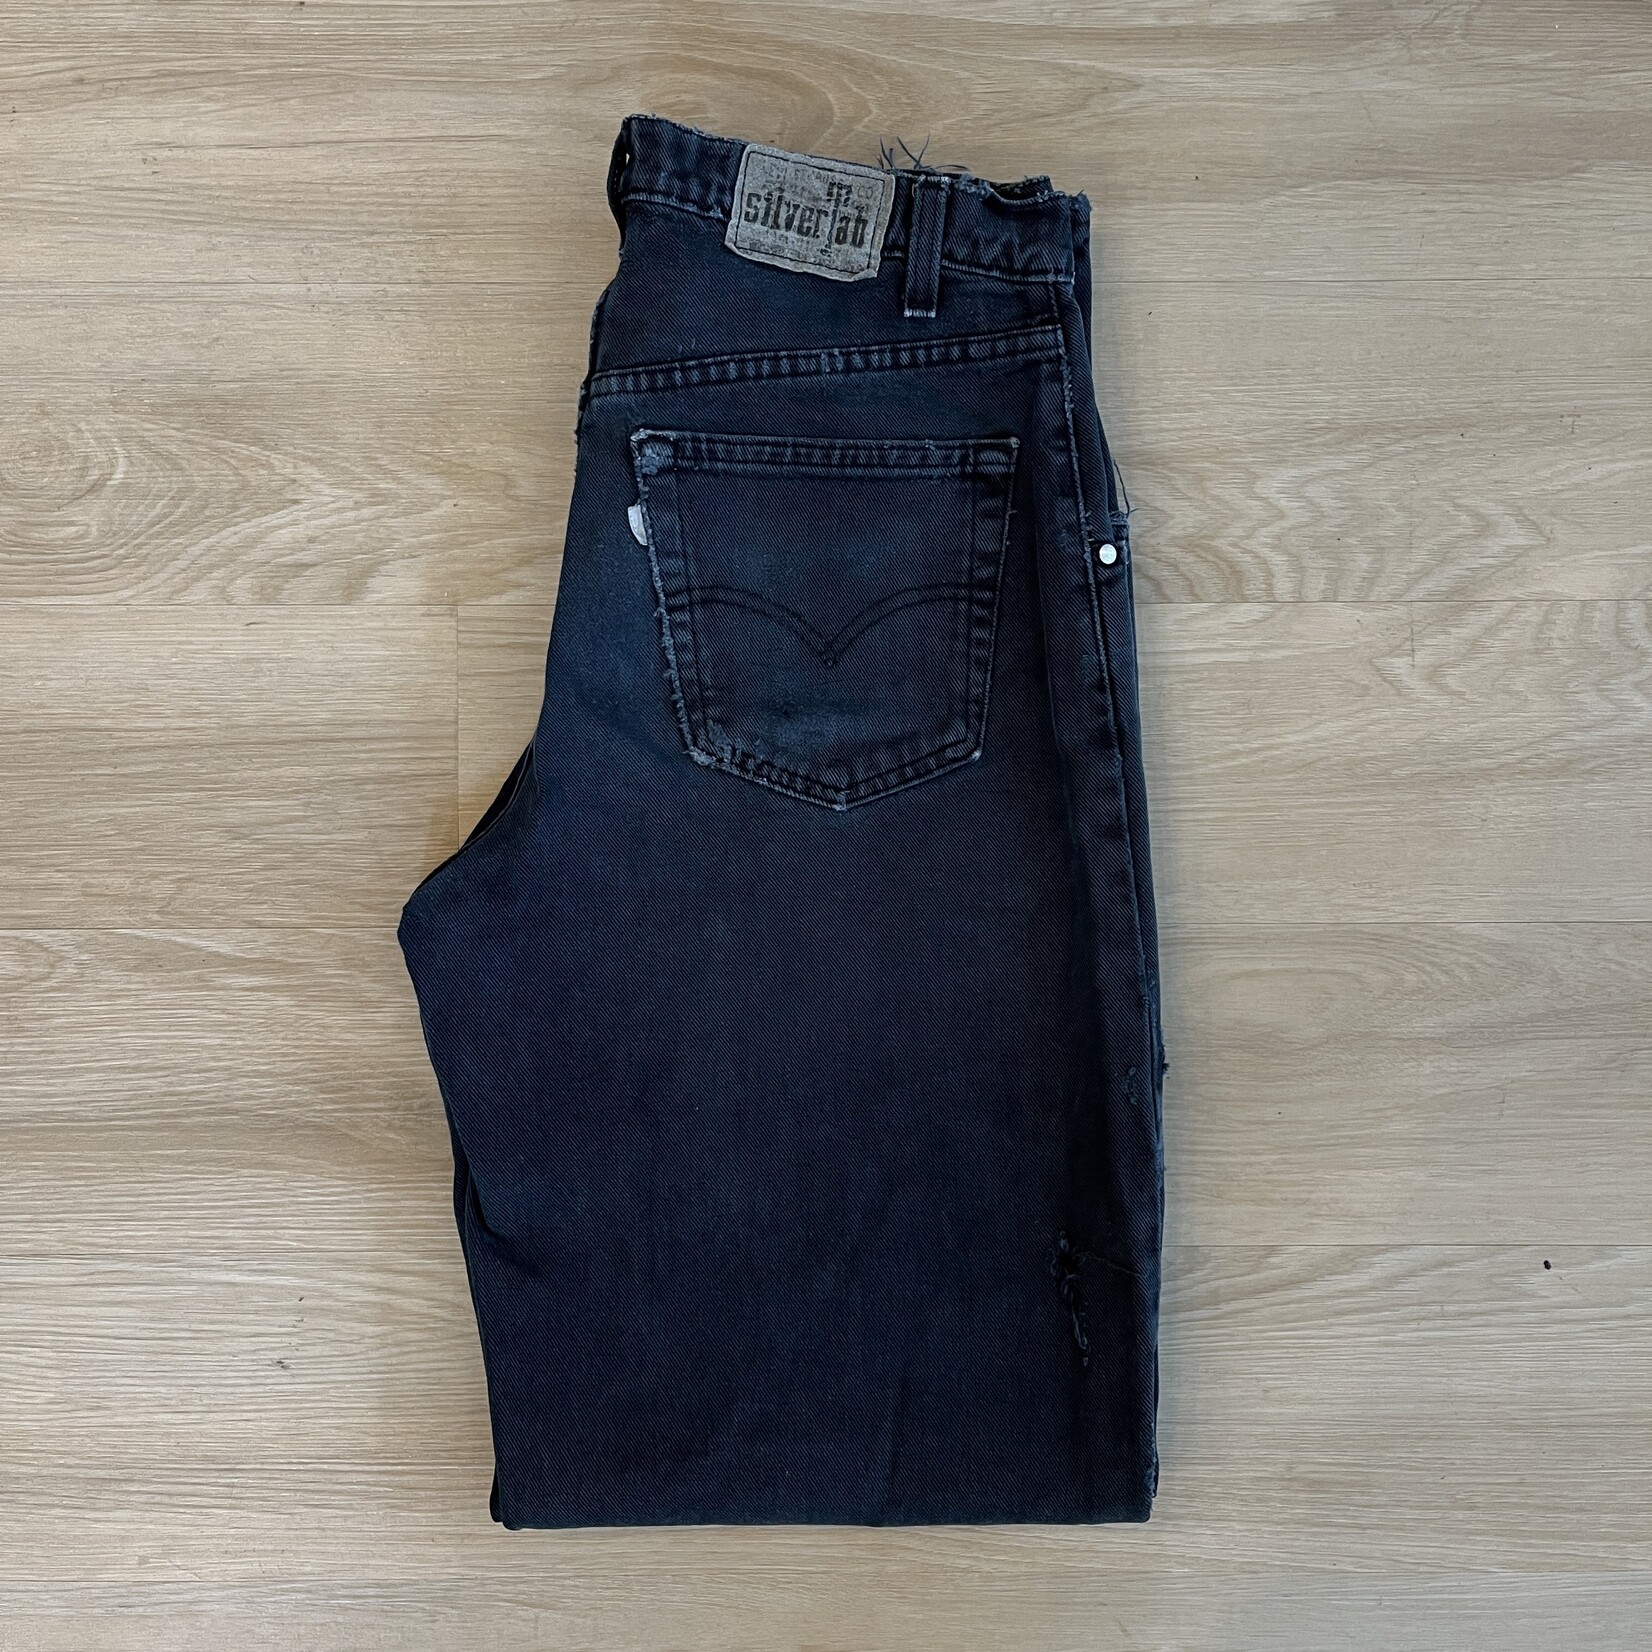 13868	1996 levi's silver tabs black jeans sz 32 x 36